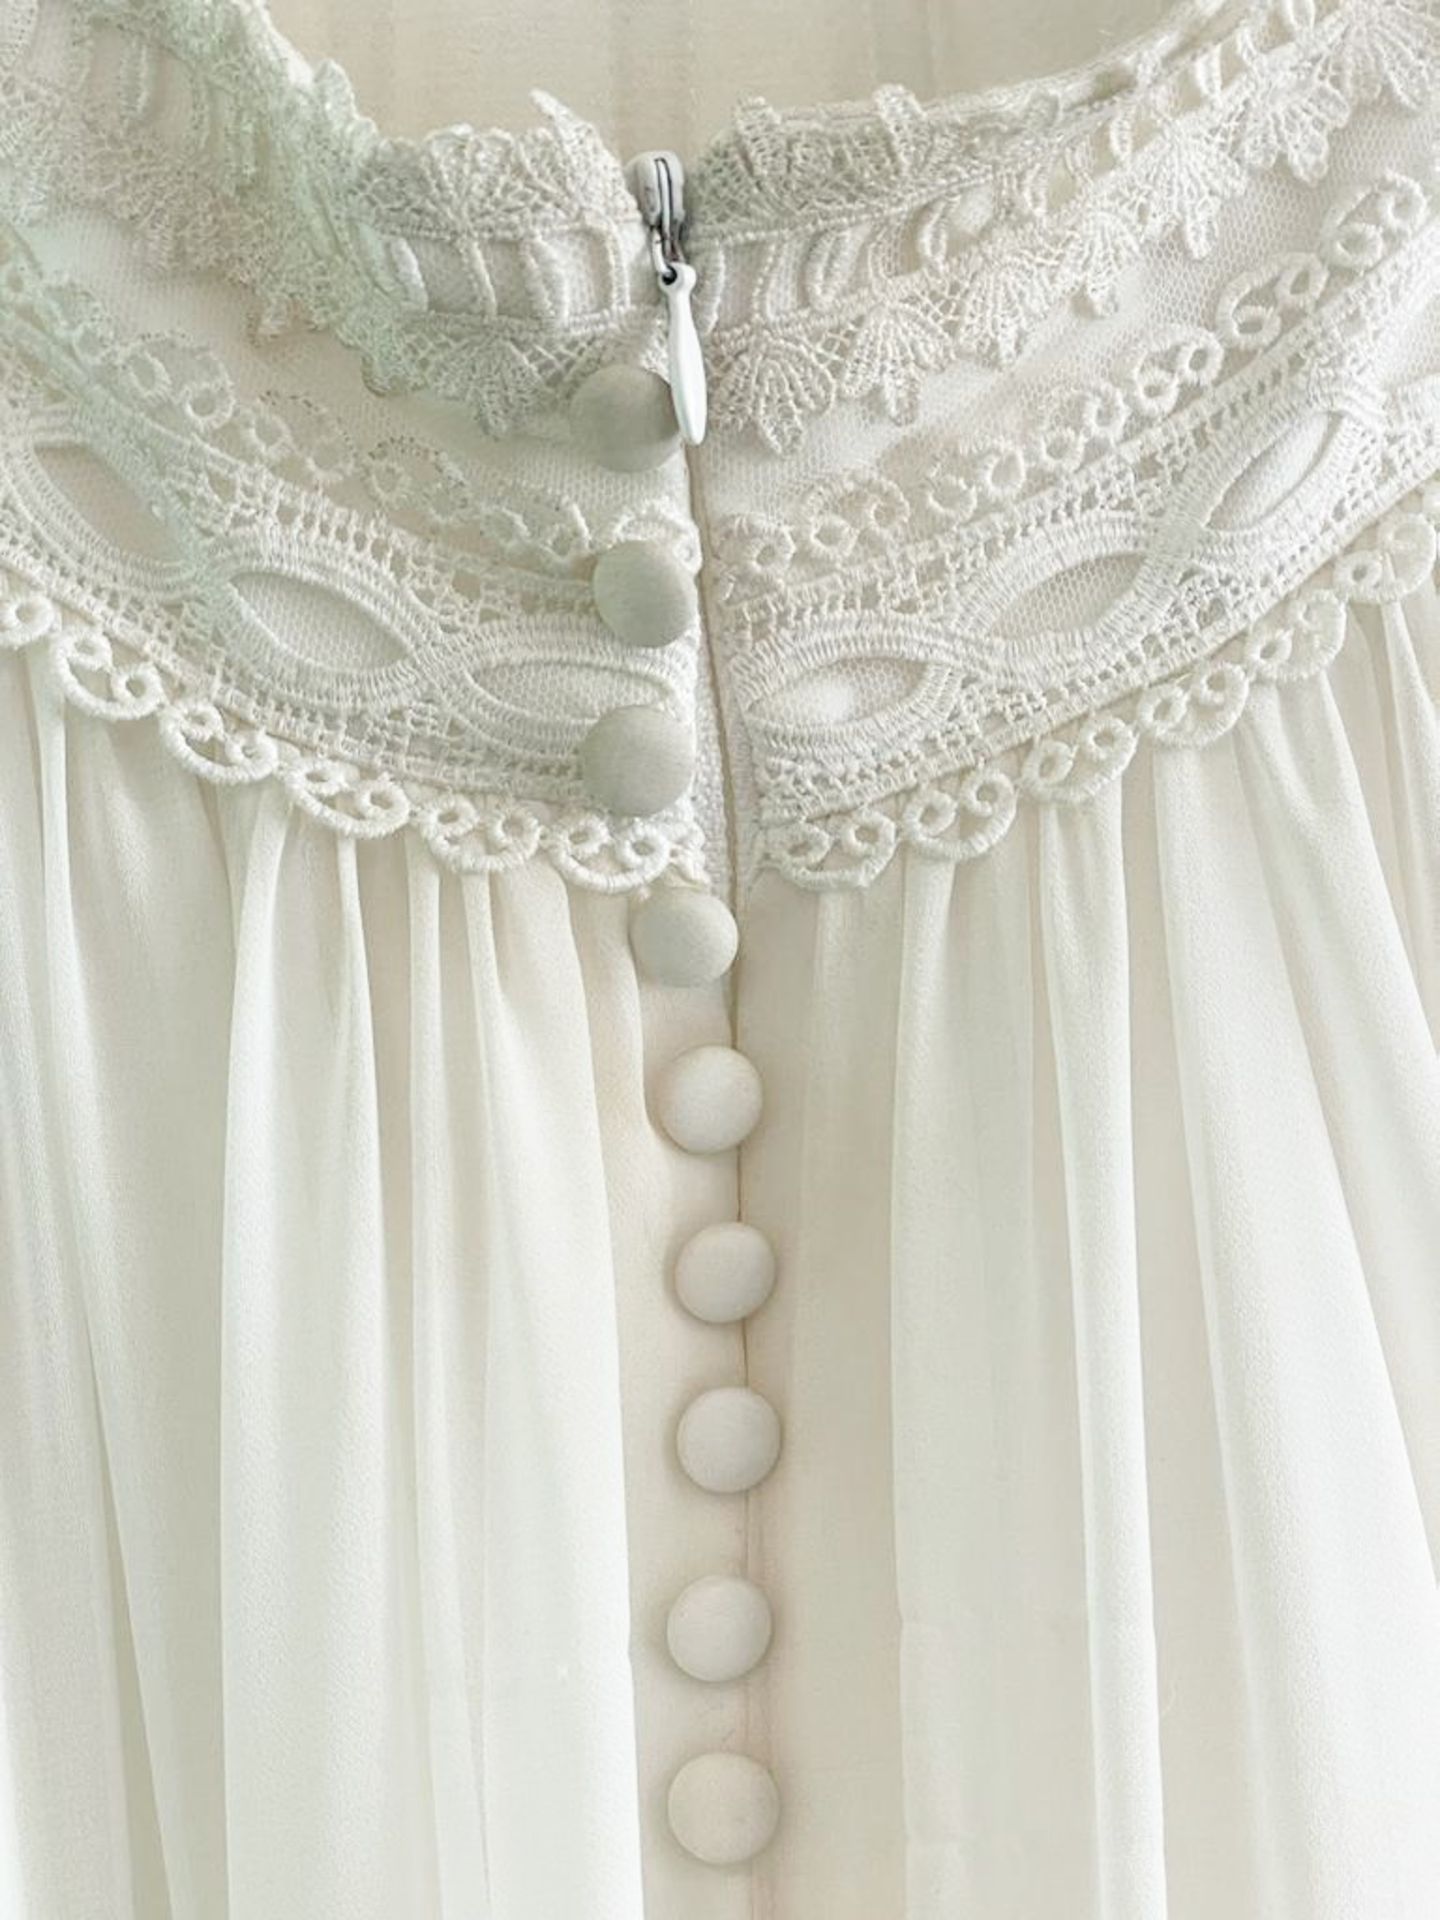 1 x PRONOVIAS 'Dramia' Designer Crocheted Lace Wedding Dress Bridal Gown, With Chiffon Gathered - Image 9 of 20